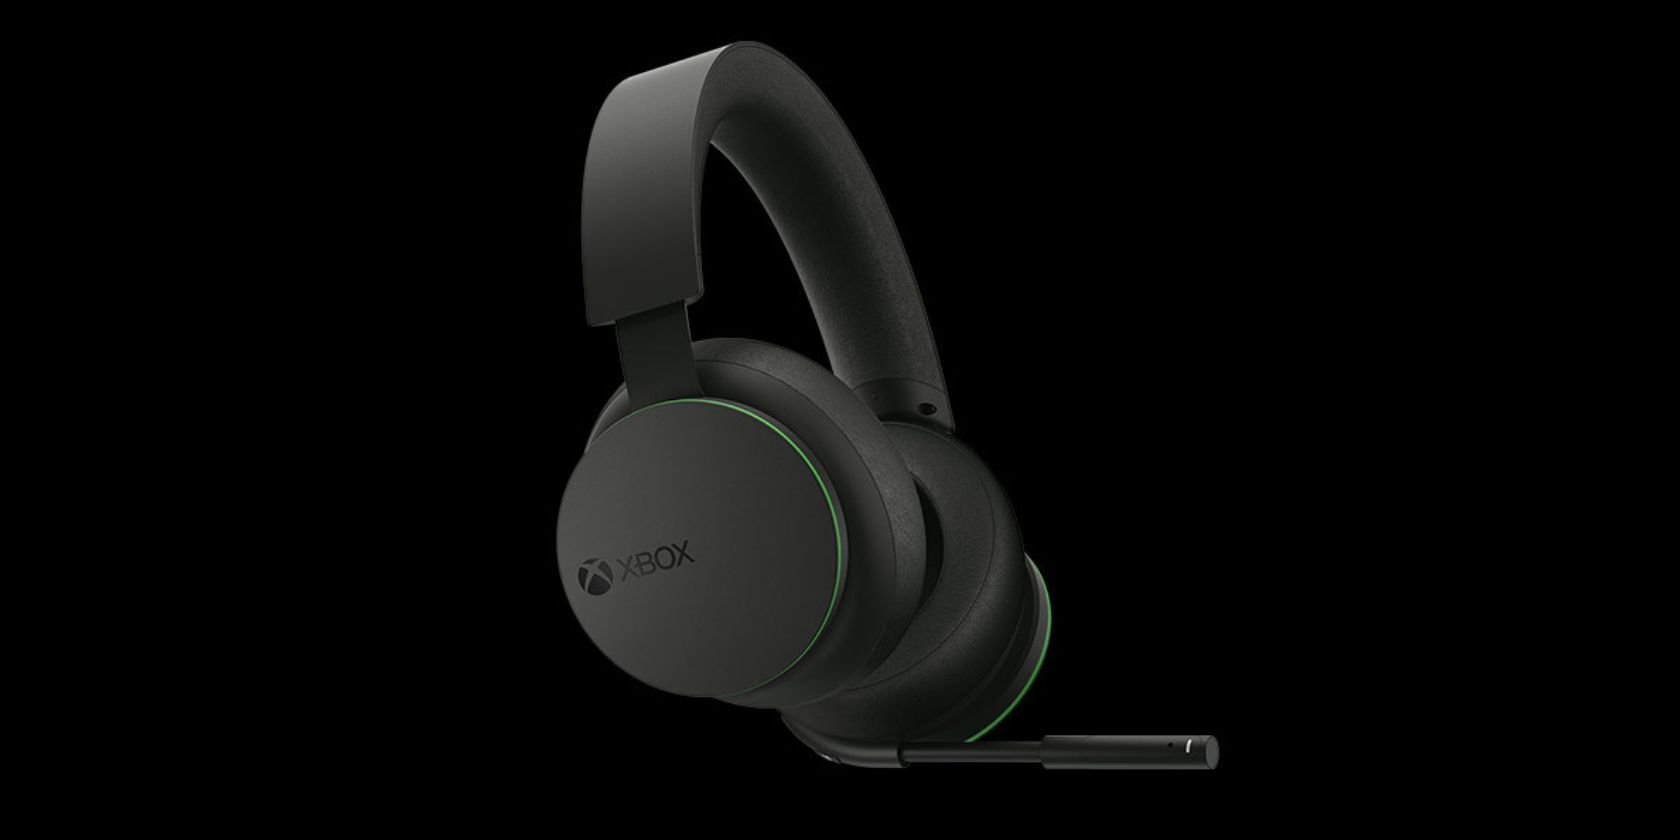 Xbox Wireless Headset on Black Background